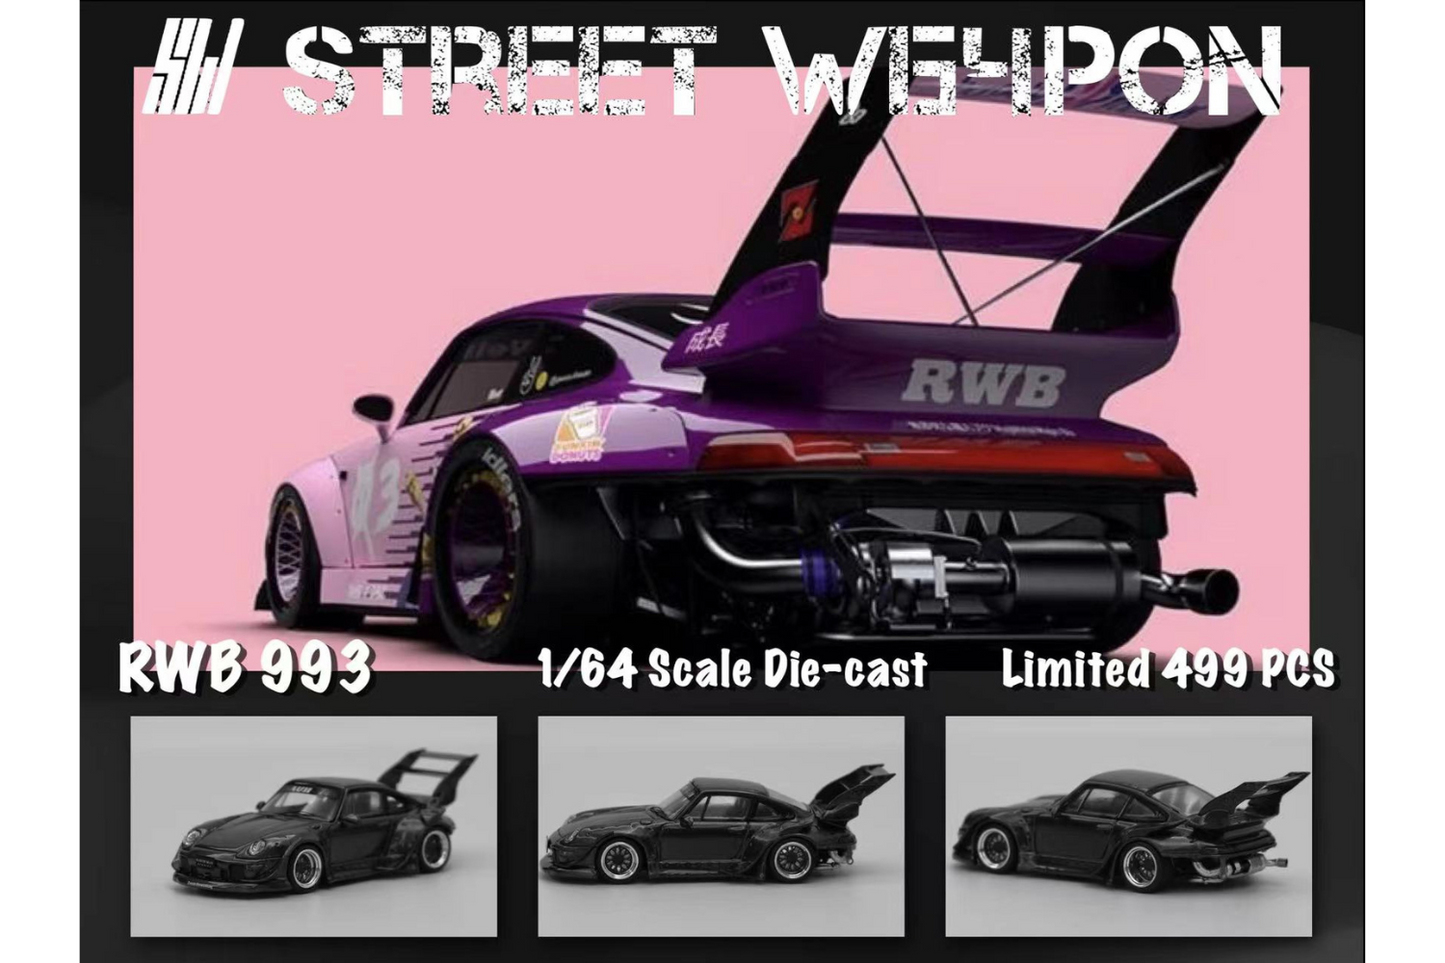 Street Weapon 1/64 Porsche RWB 993 in Dragon Ball Z Livery